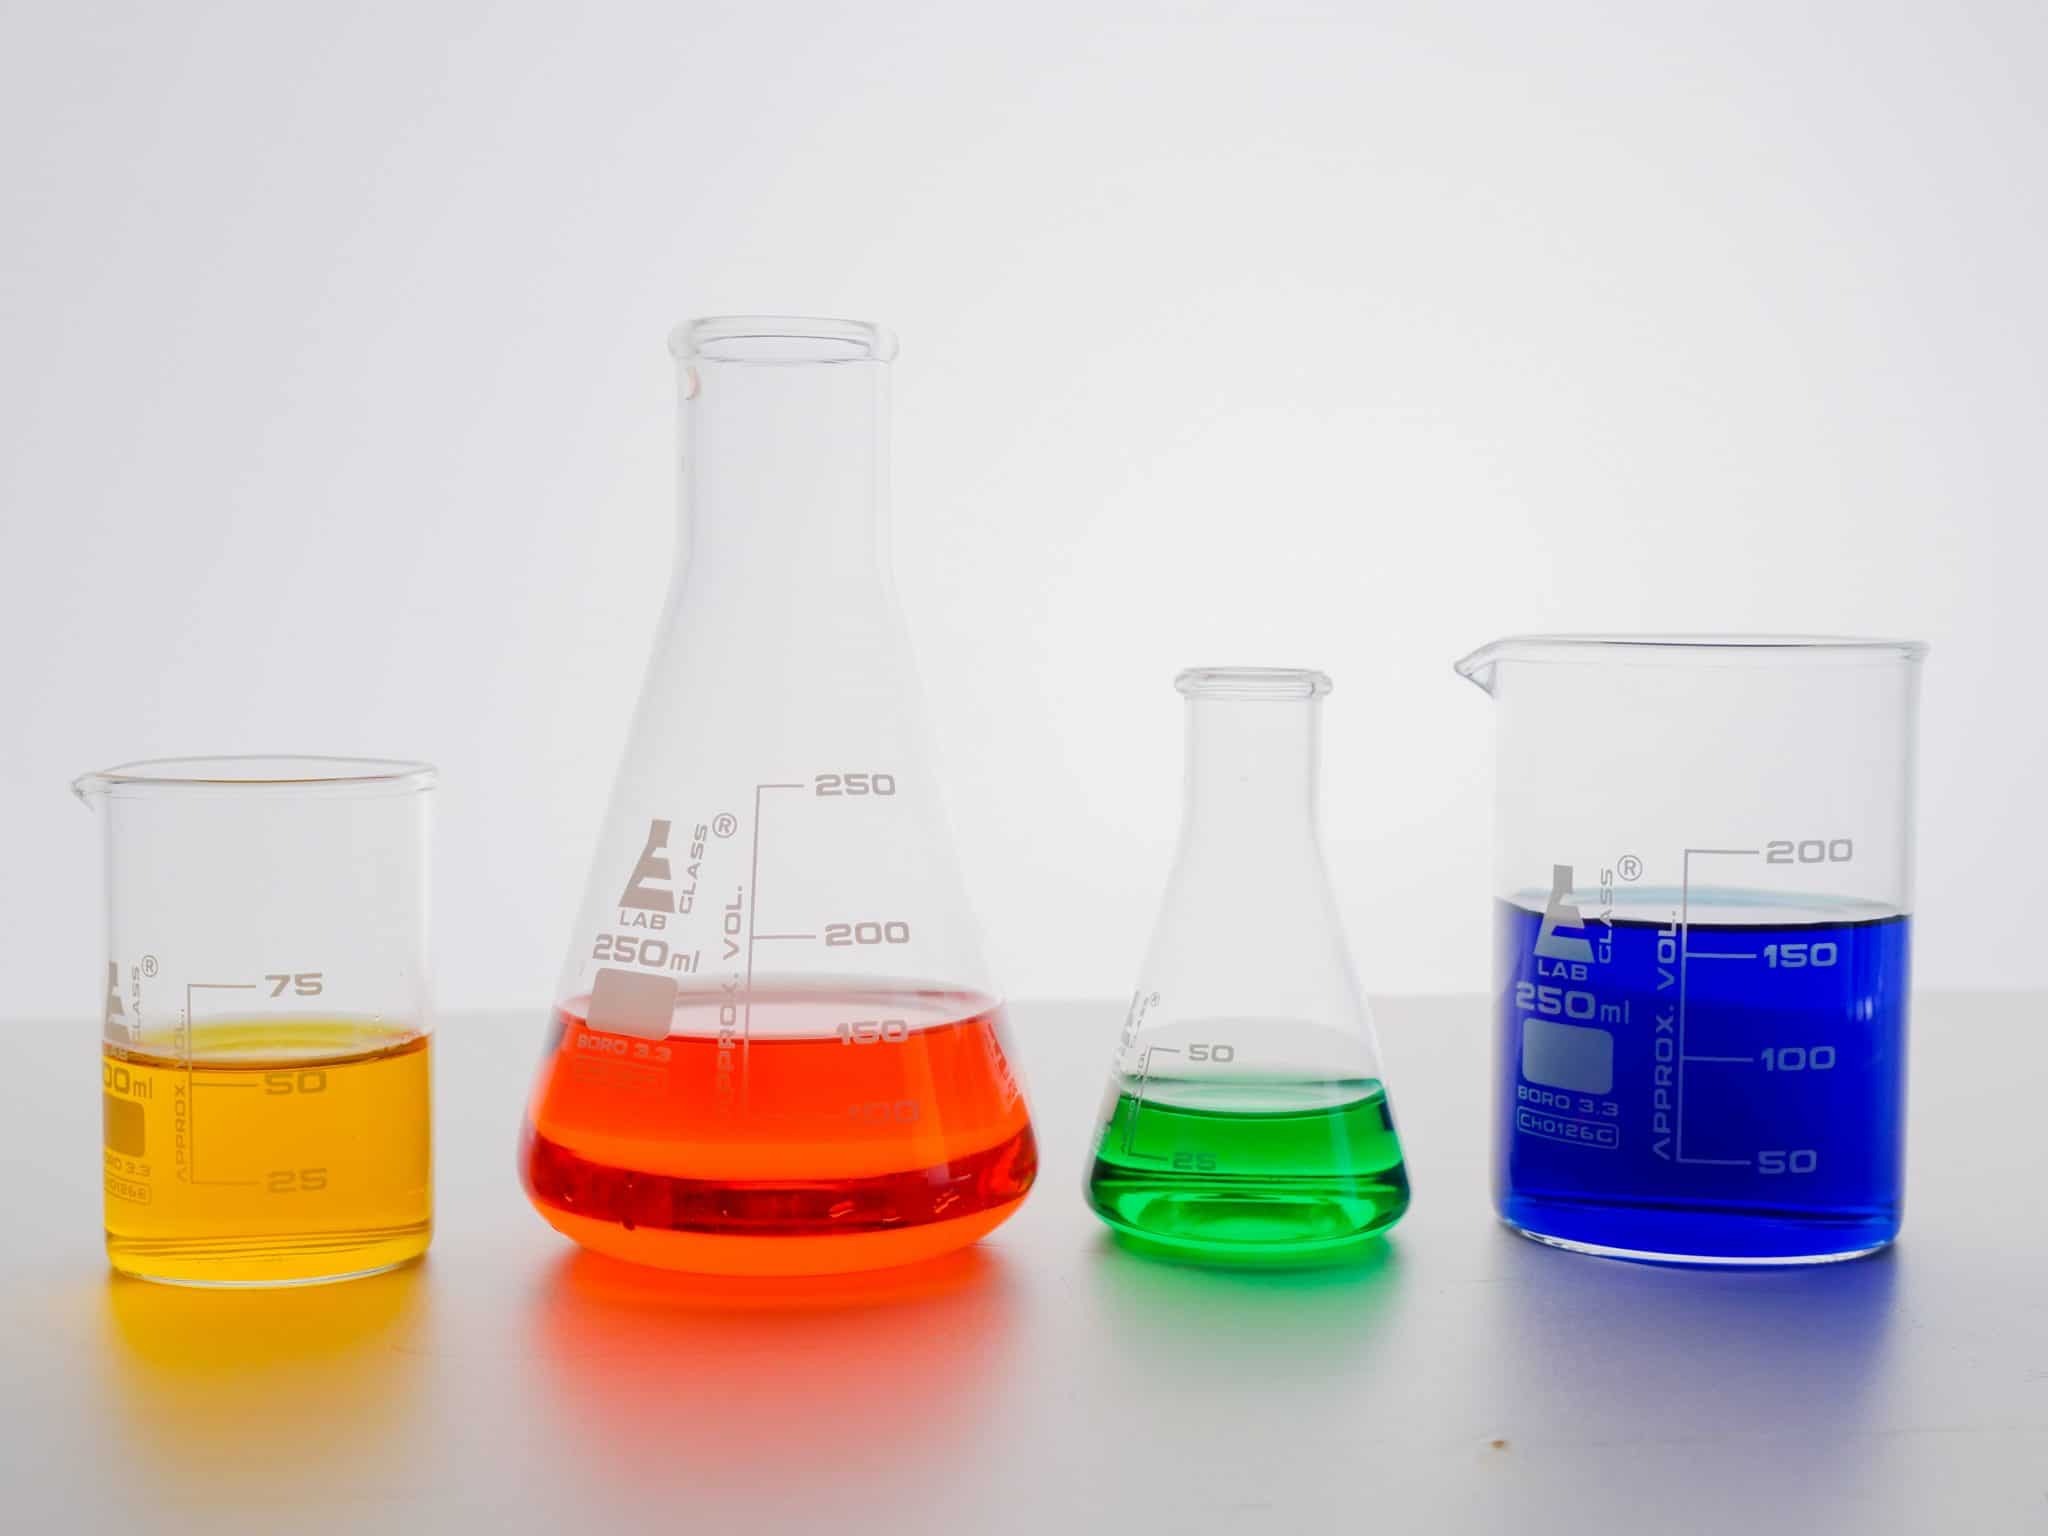 Different colored liquid chemicals in beakers.